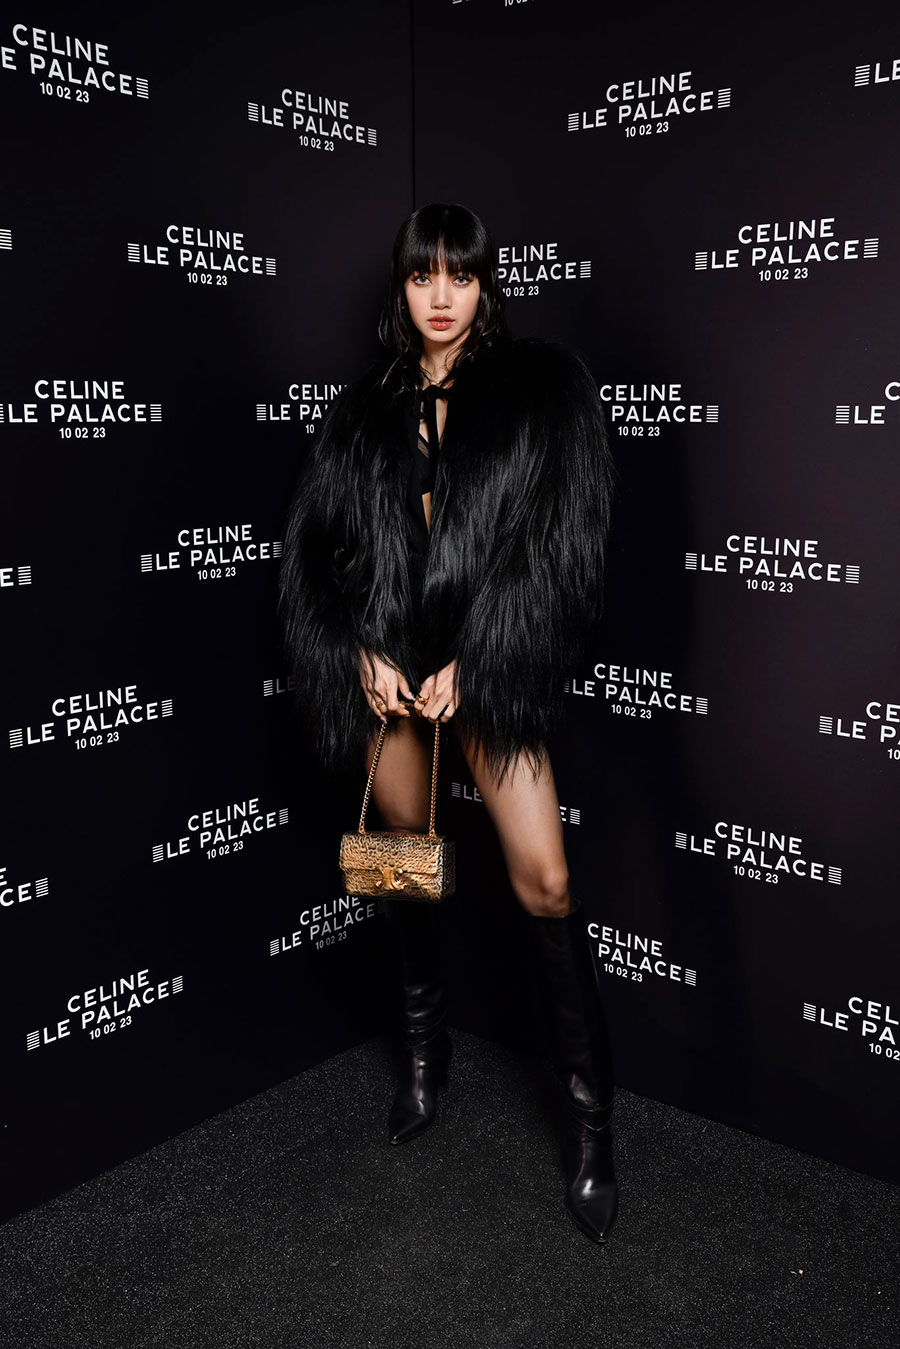 LISA at CELINE’s Men Winter Collection 23 “PARIS SYNDROME” Fashion Show ...